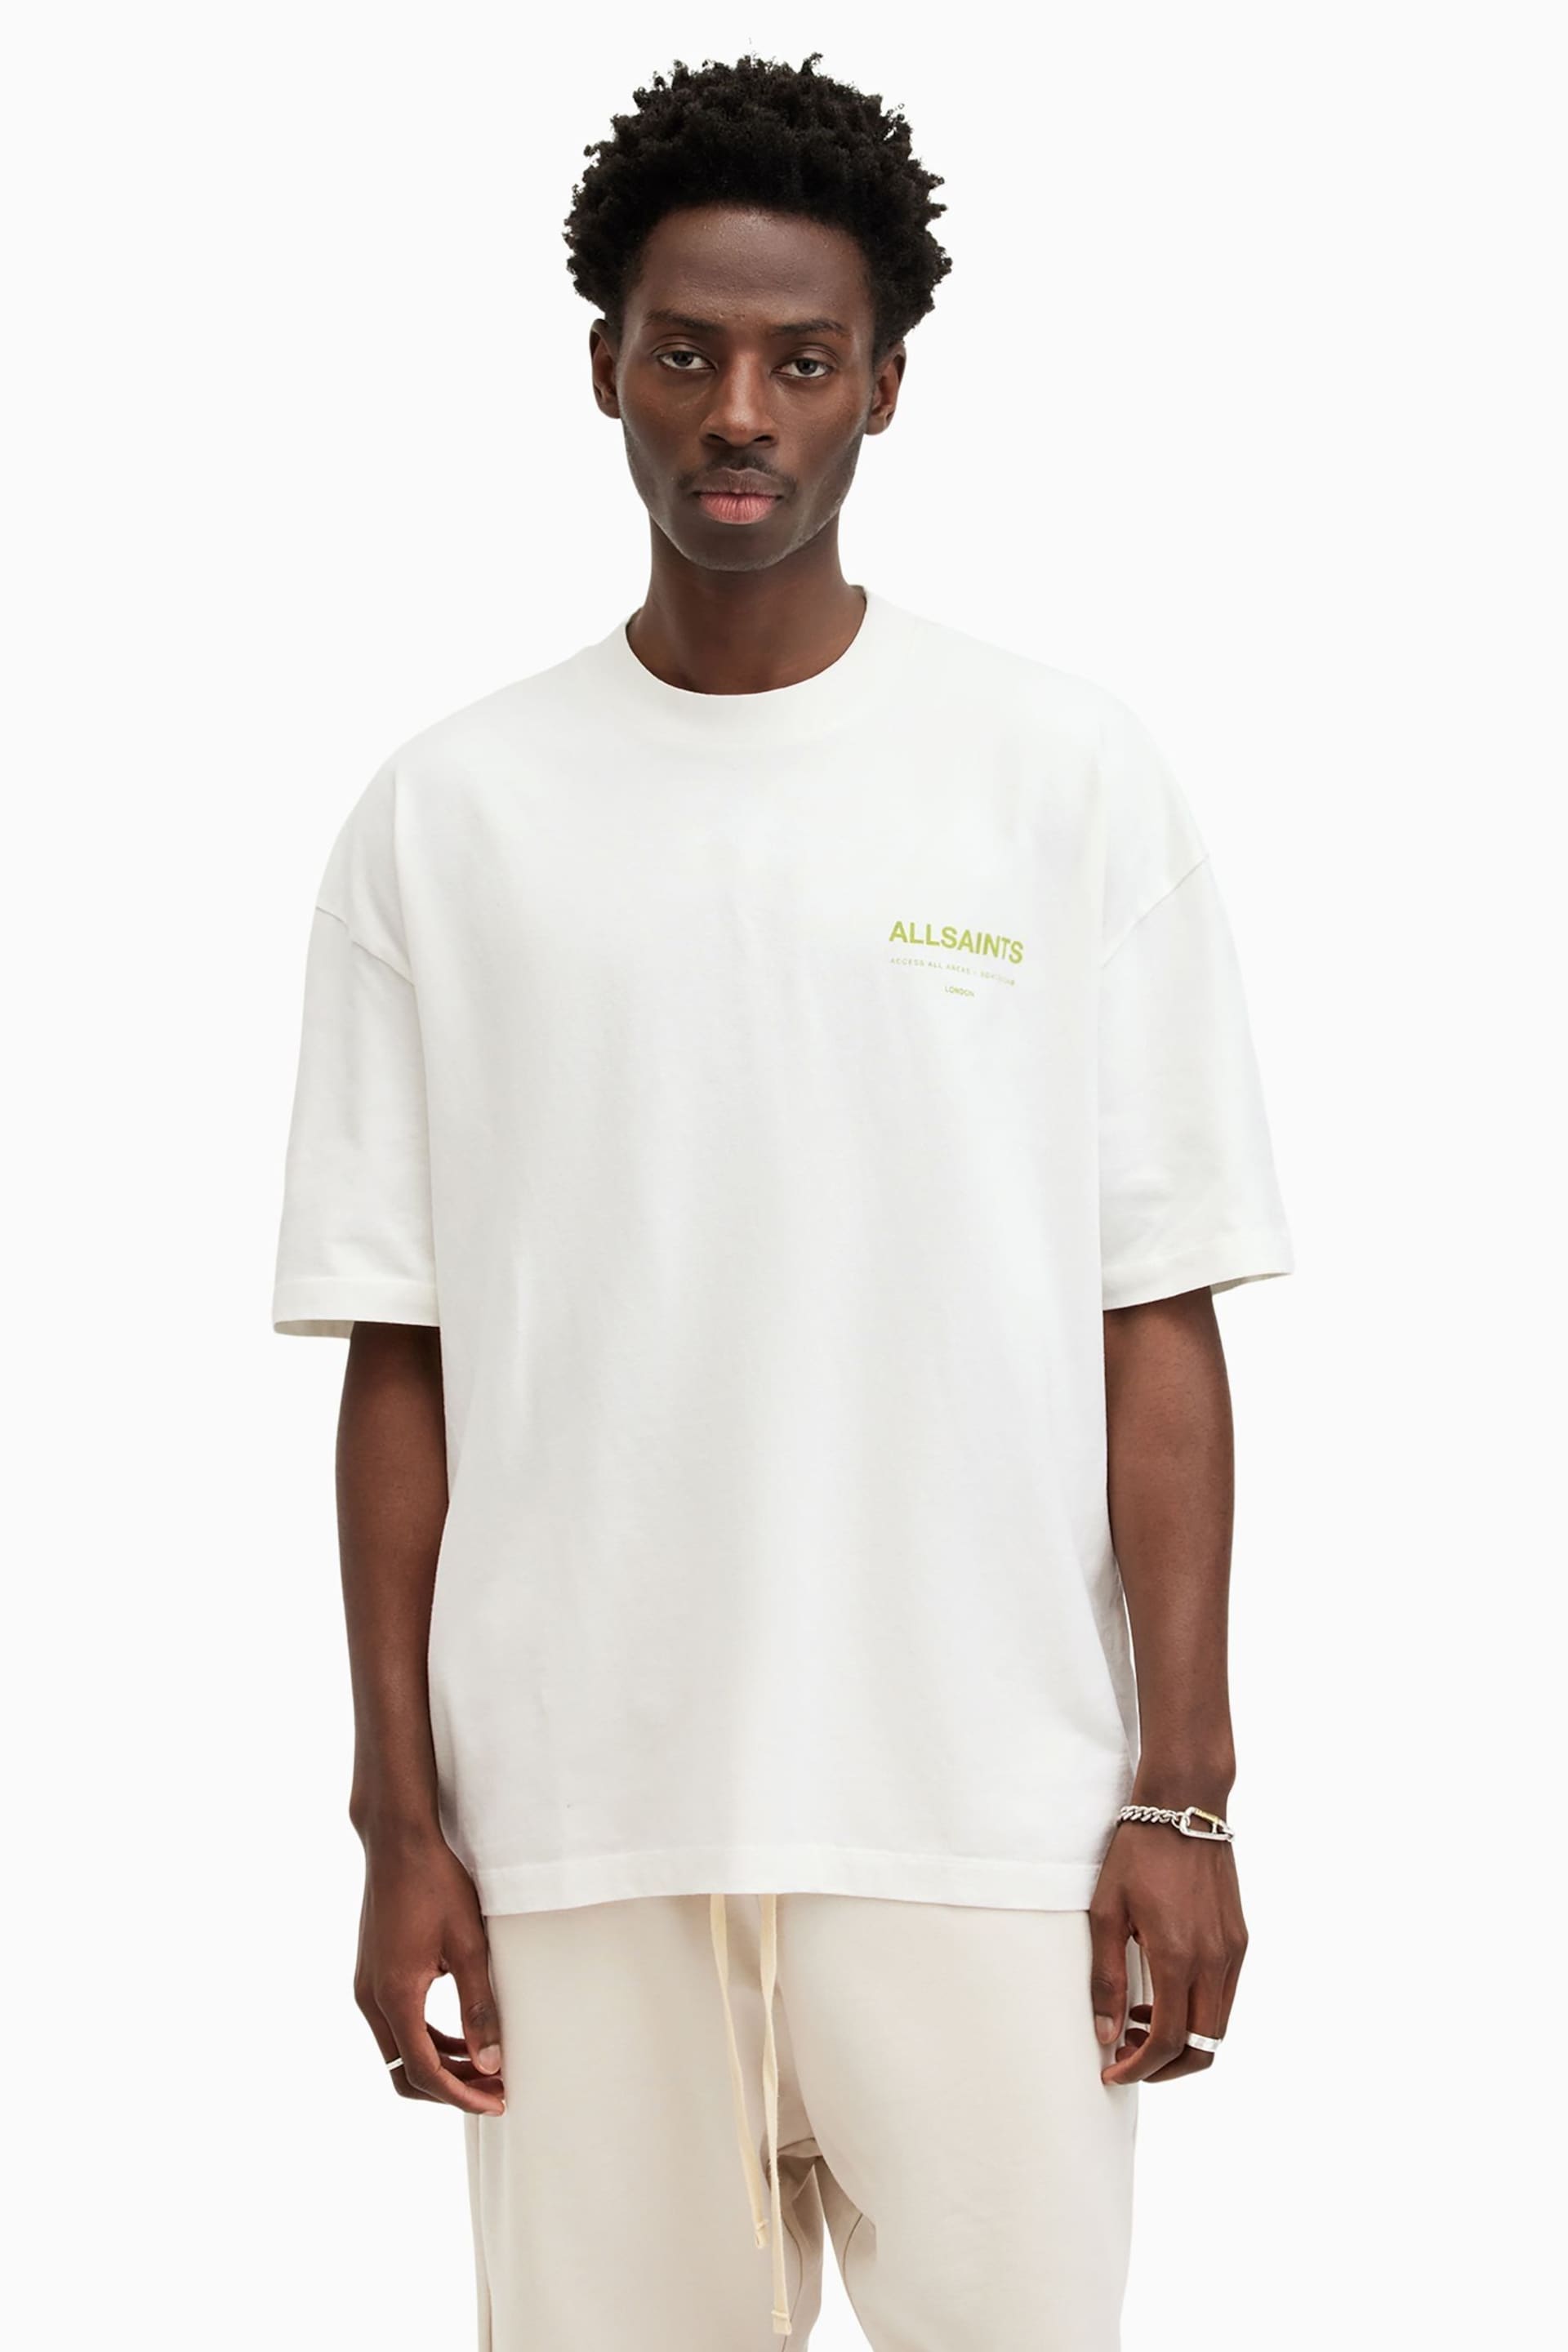 AllSaints White Access Short Sleeve Crew T-Shirt - Image 1 of 7